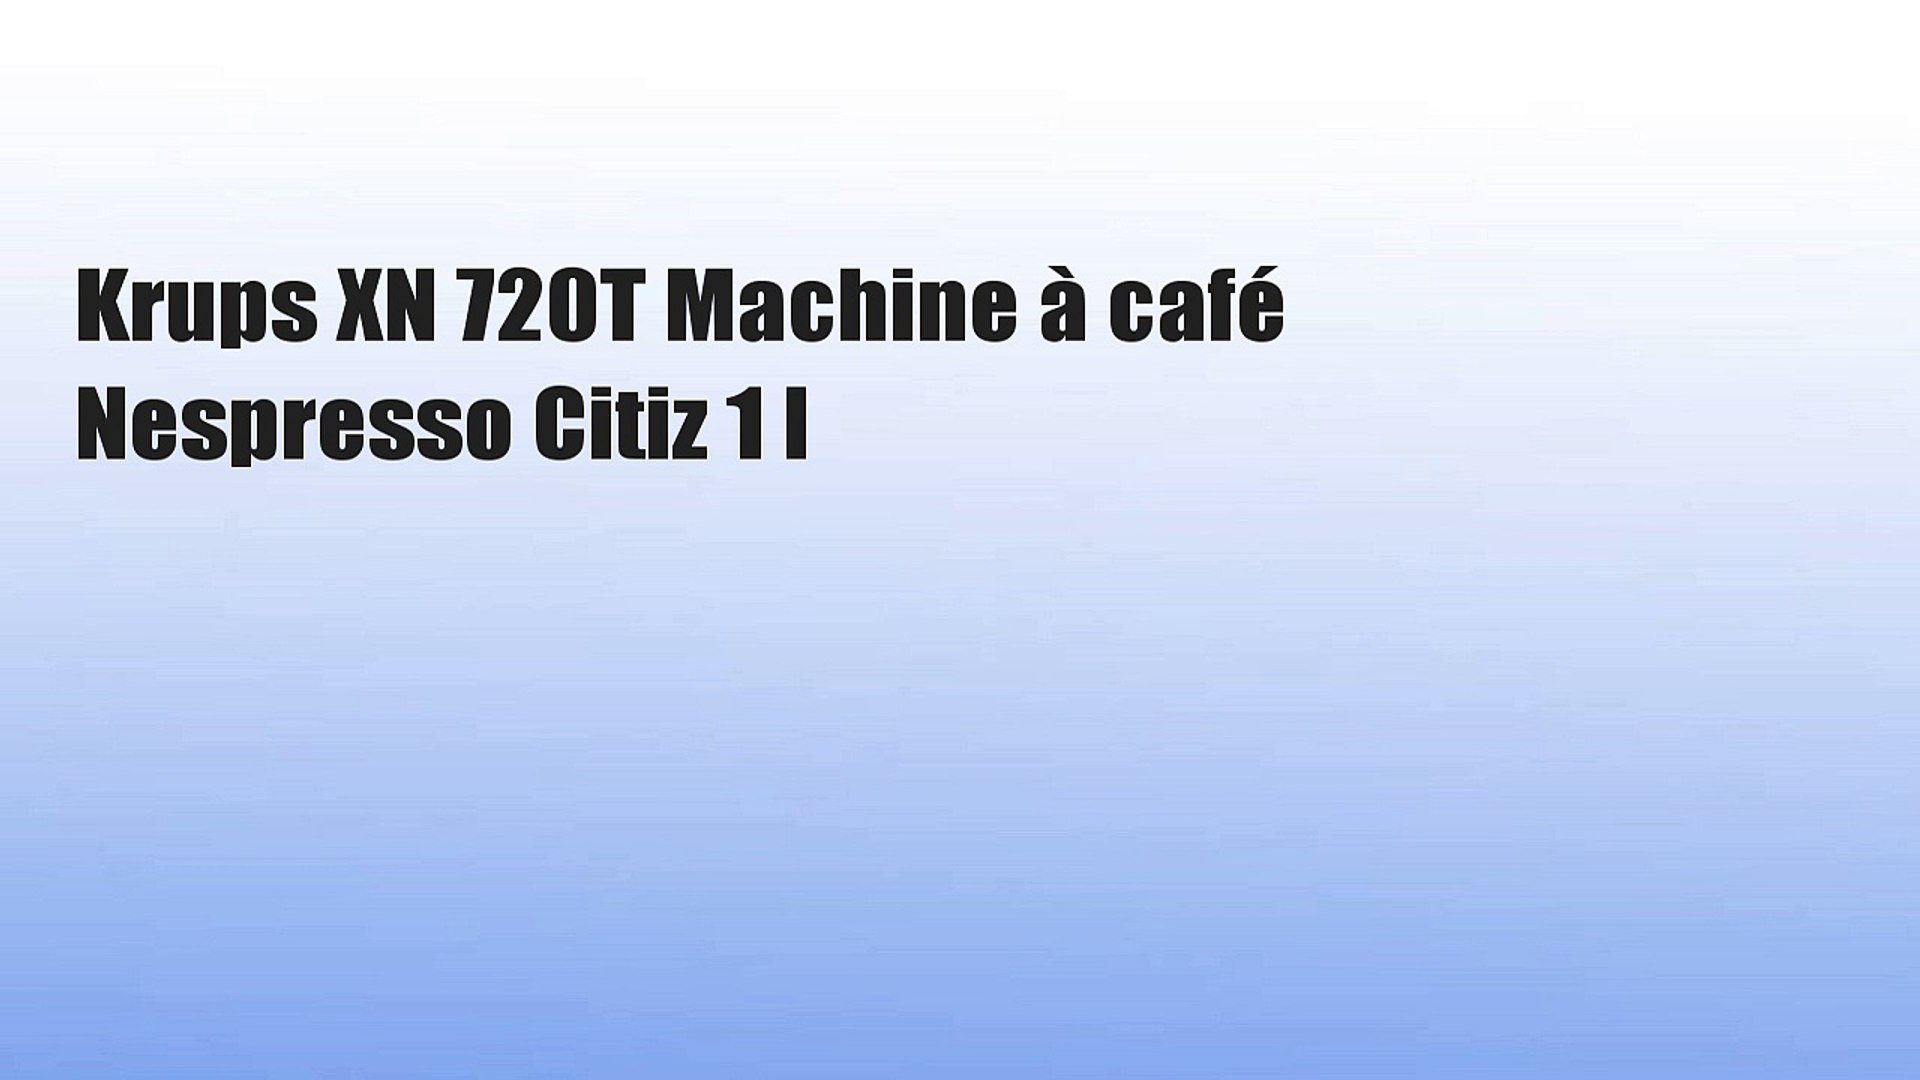 Krups XN 720T Machine à café Nespresso Citiz 1 l - video Dailymotion